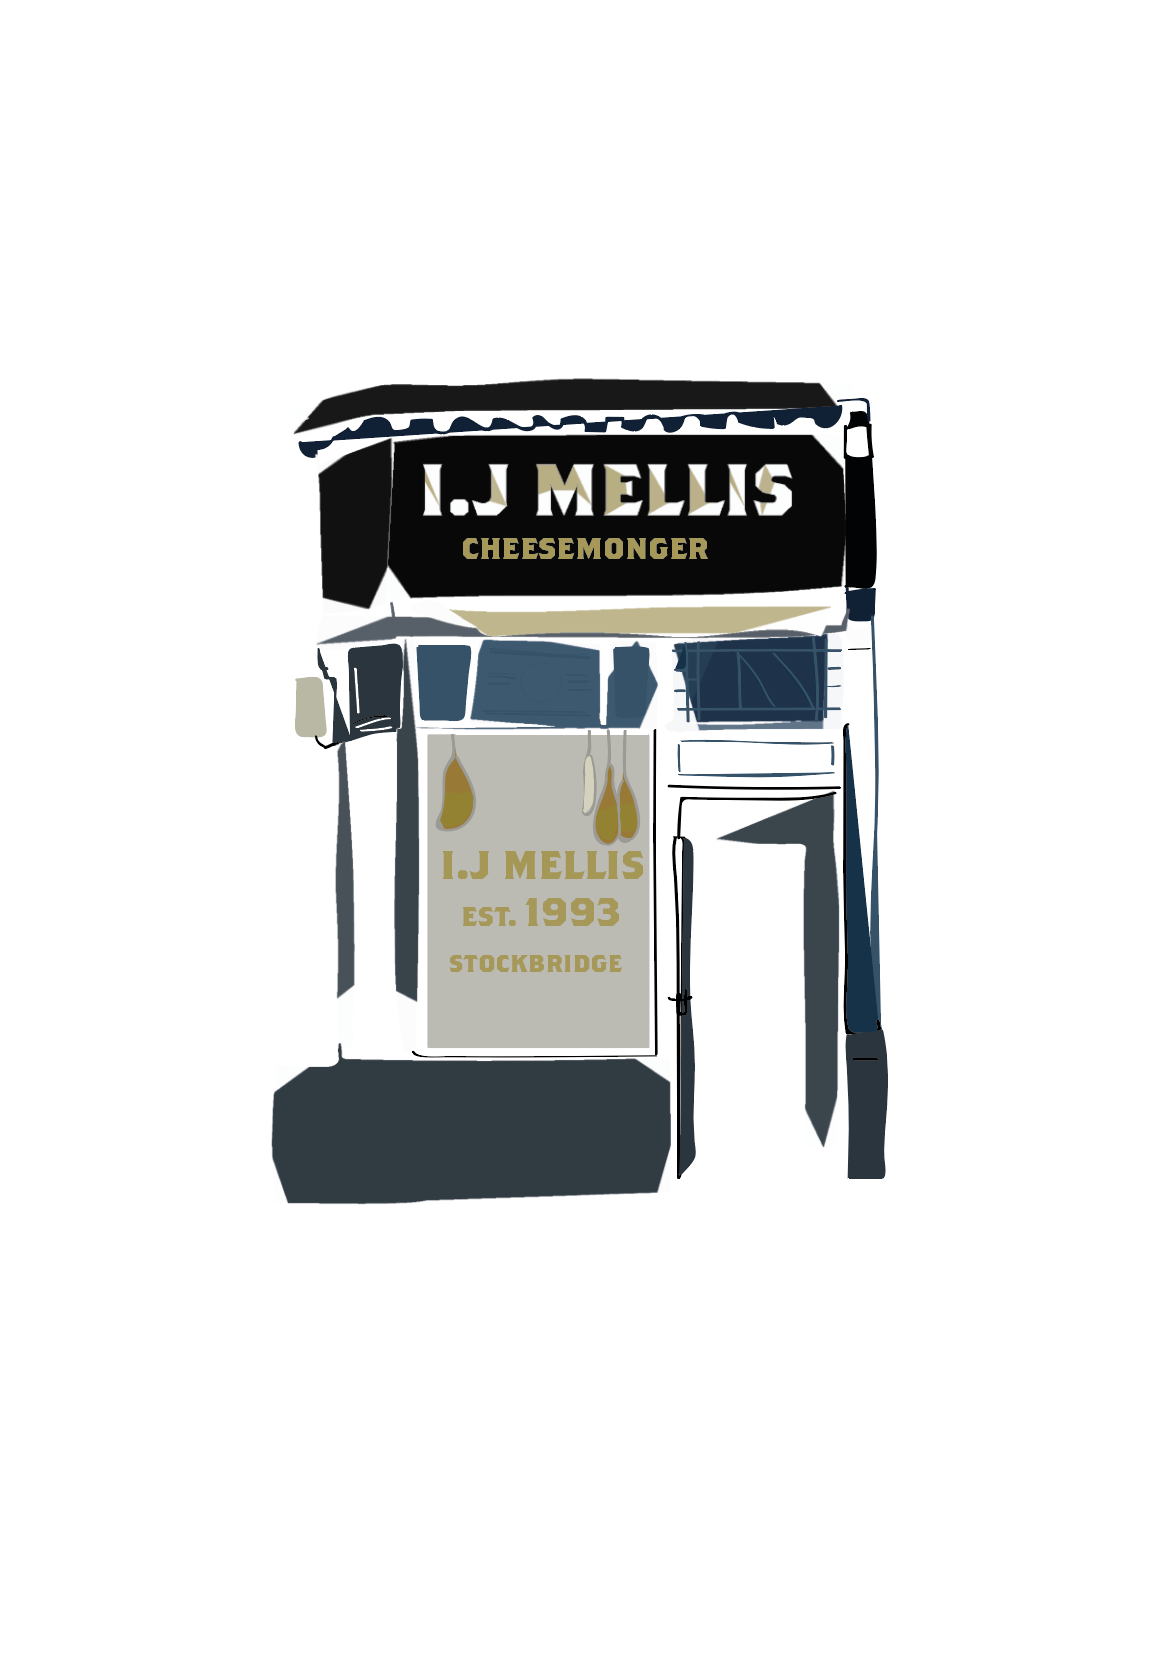 Mellis Cheese Shop